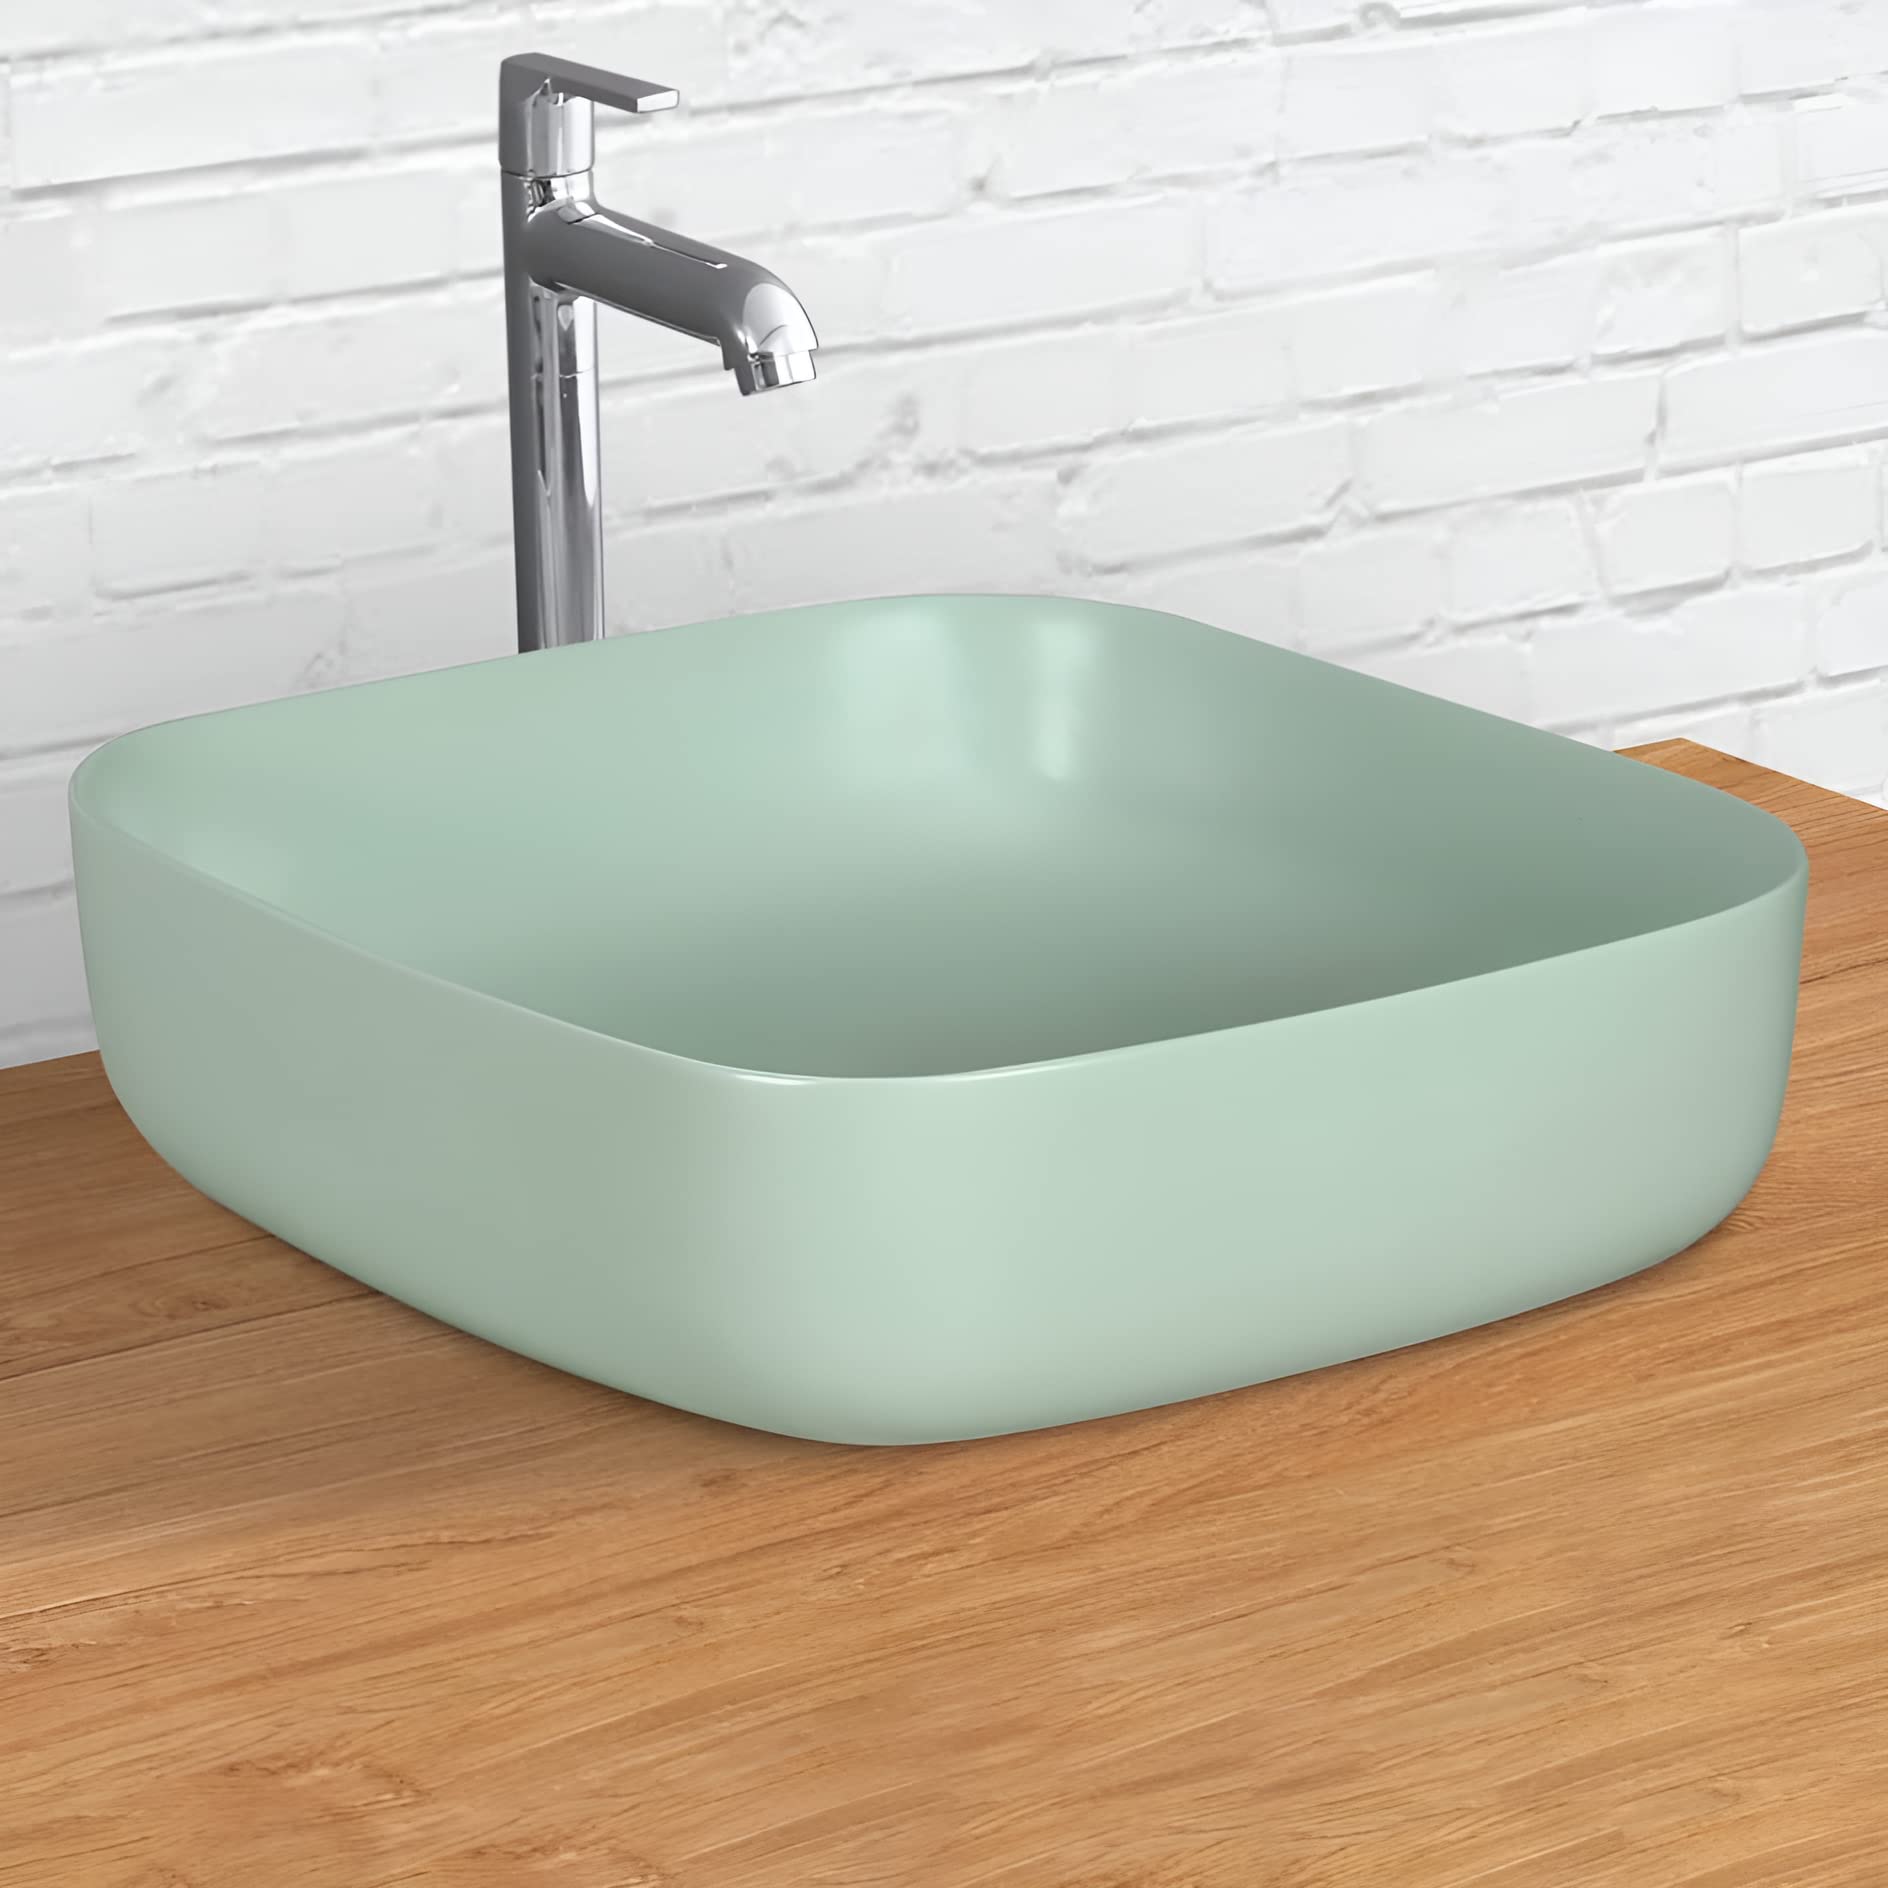 Plantex Premium Tabletop Ceramic Square Wash Basin/Countertop Bathroom Sink (Olive, 16 x 16 x 5 Inch)